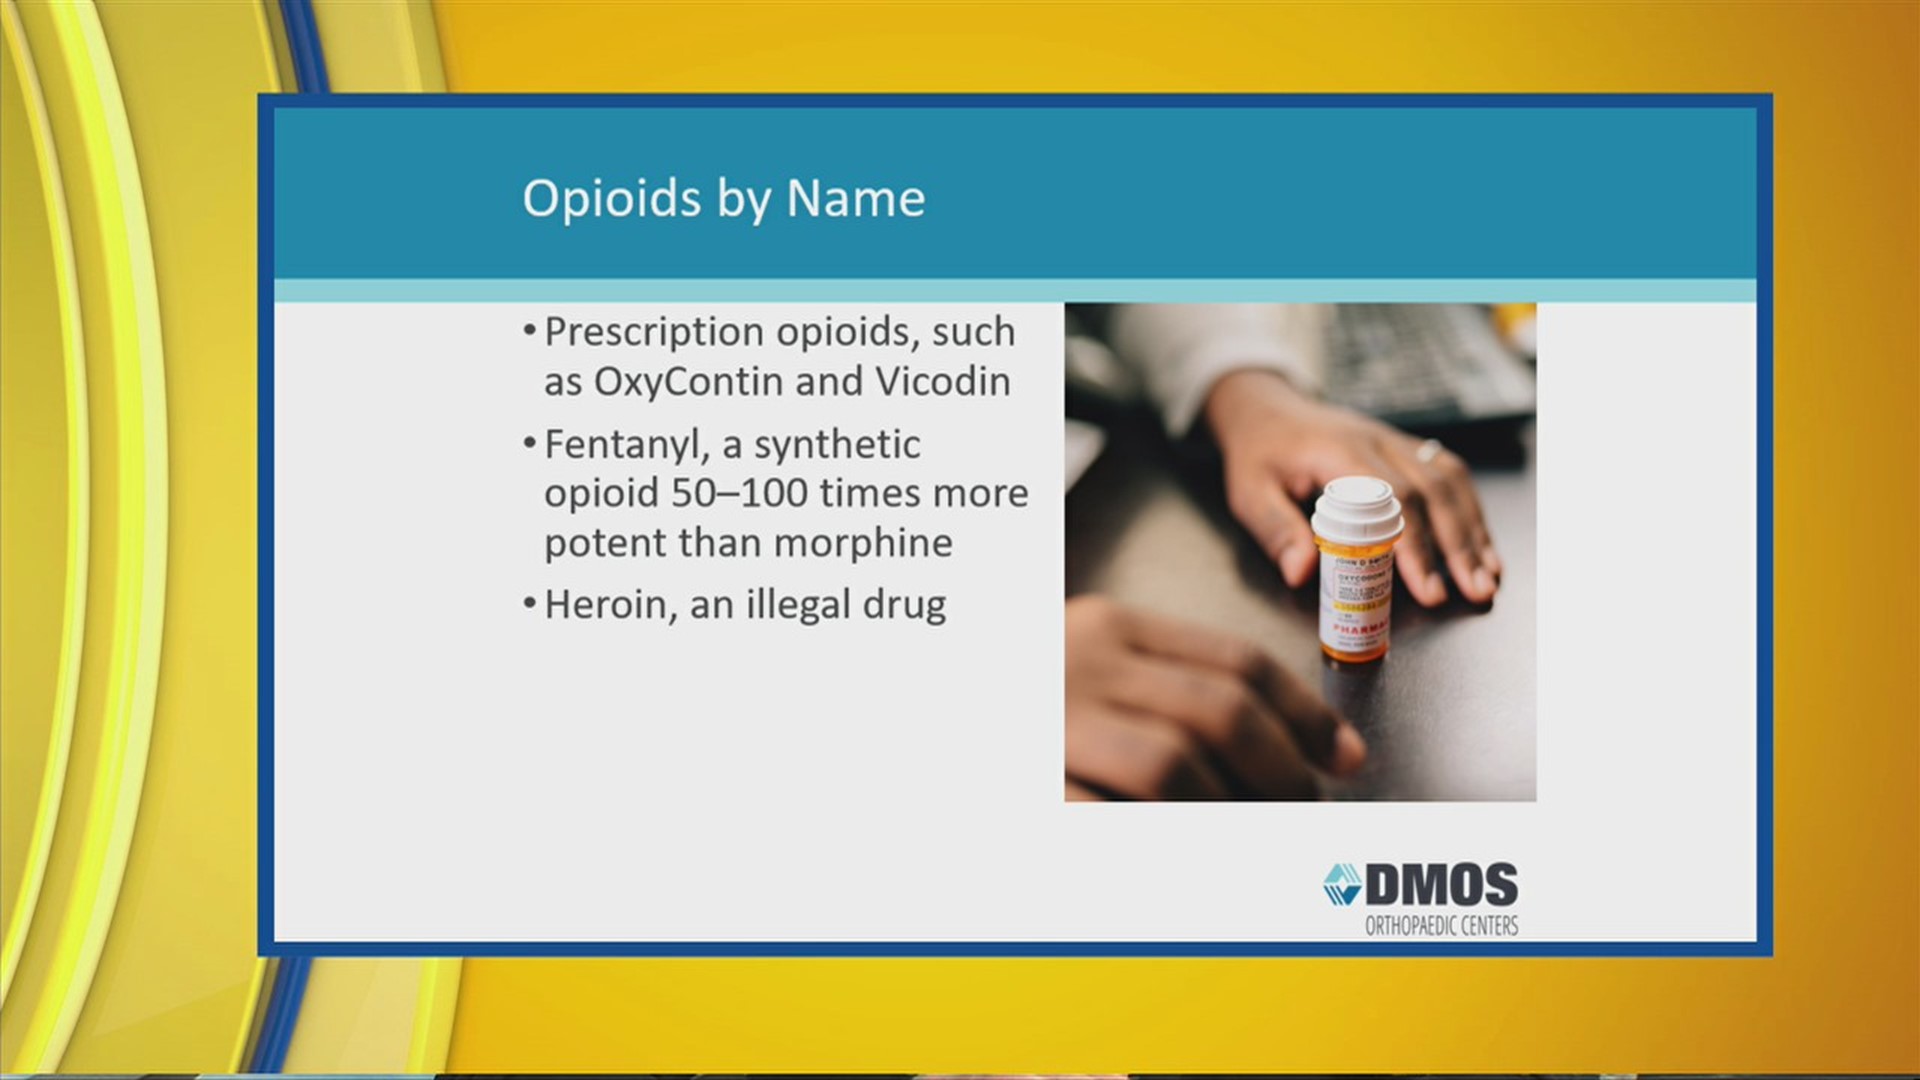 DMOS Orthopedic Minute: Opioids